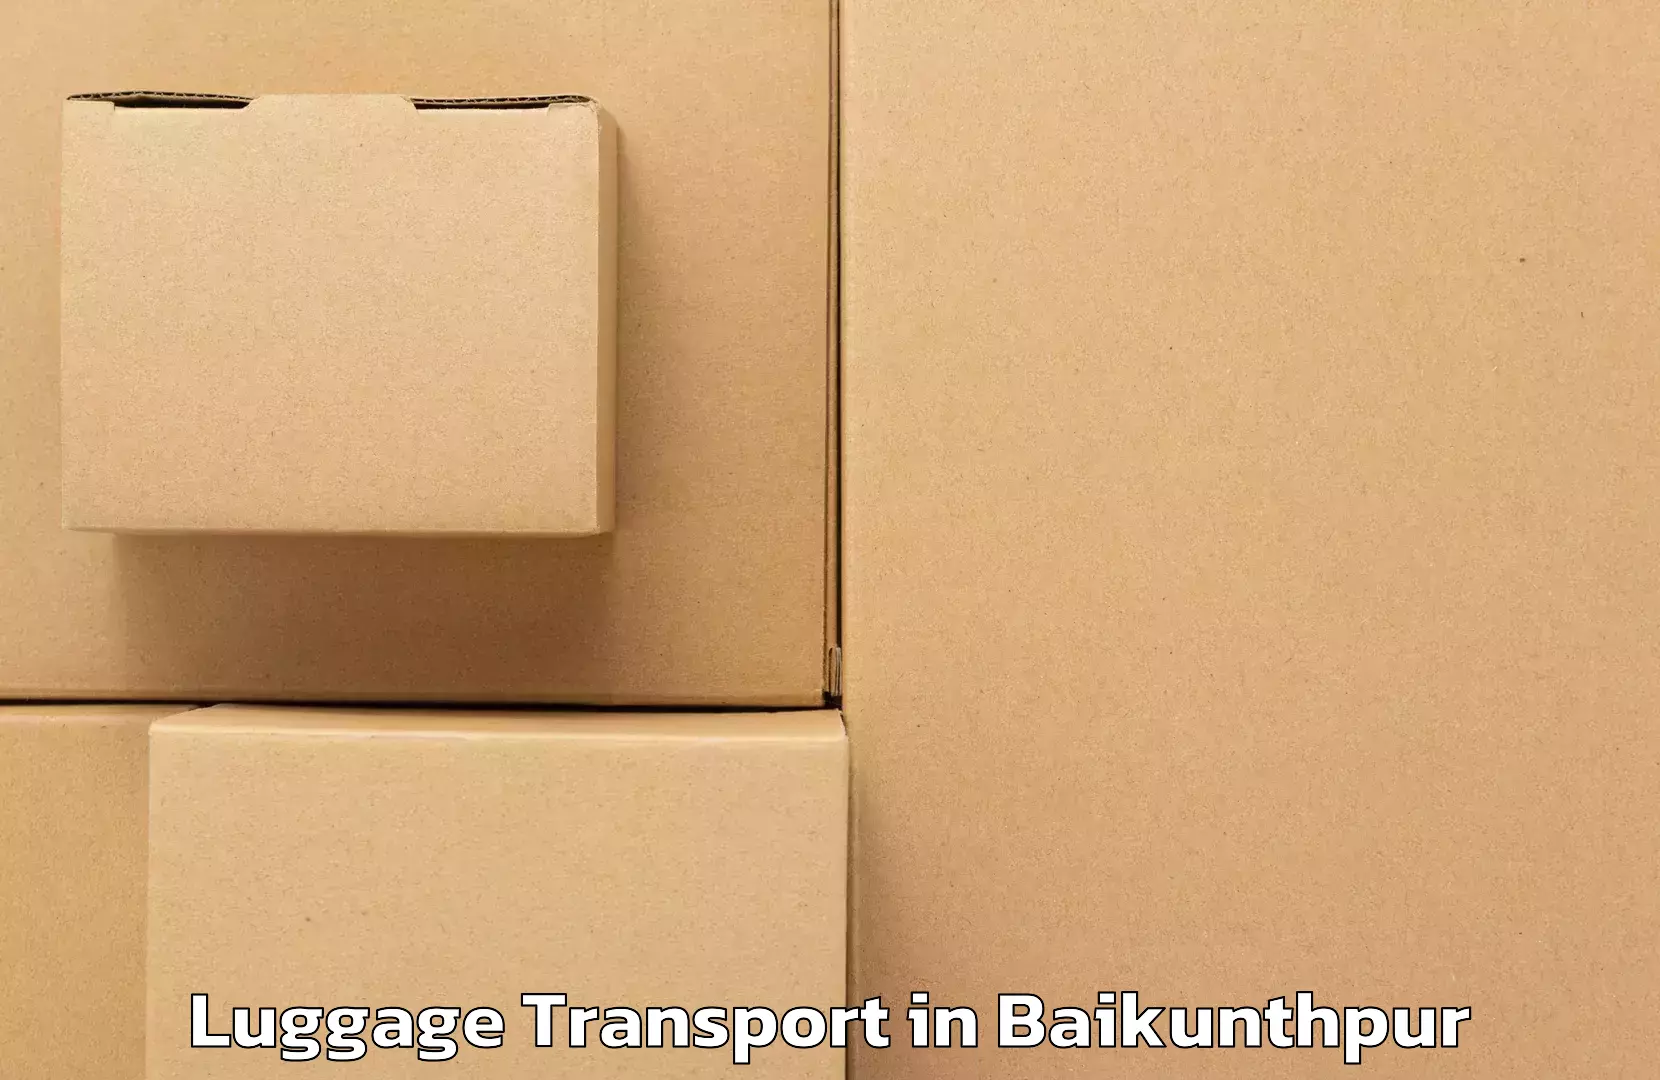 Luggage shipping service in Baikunthpur